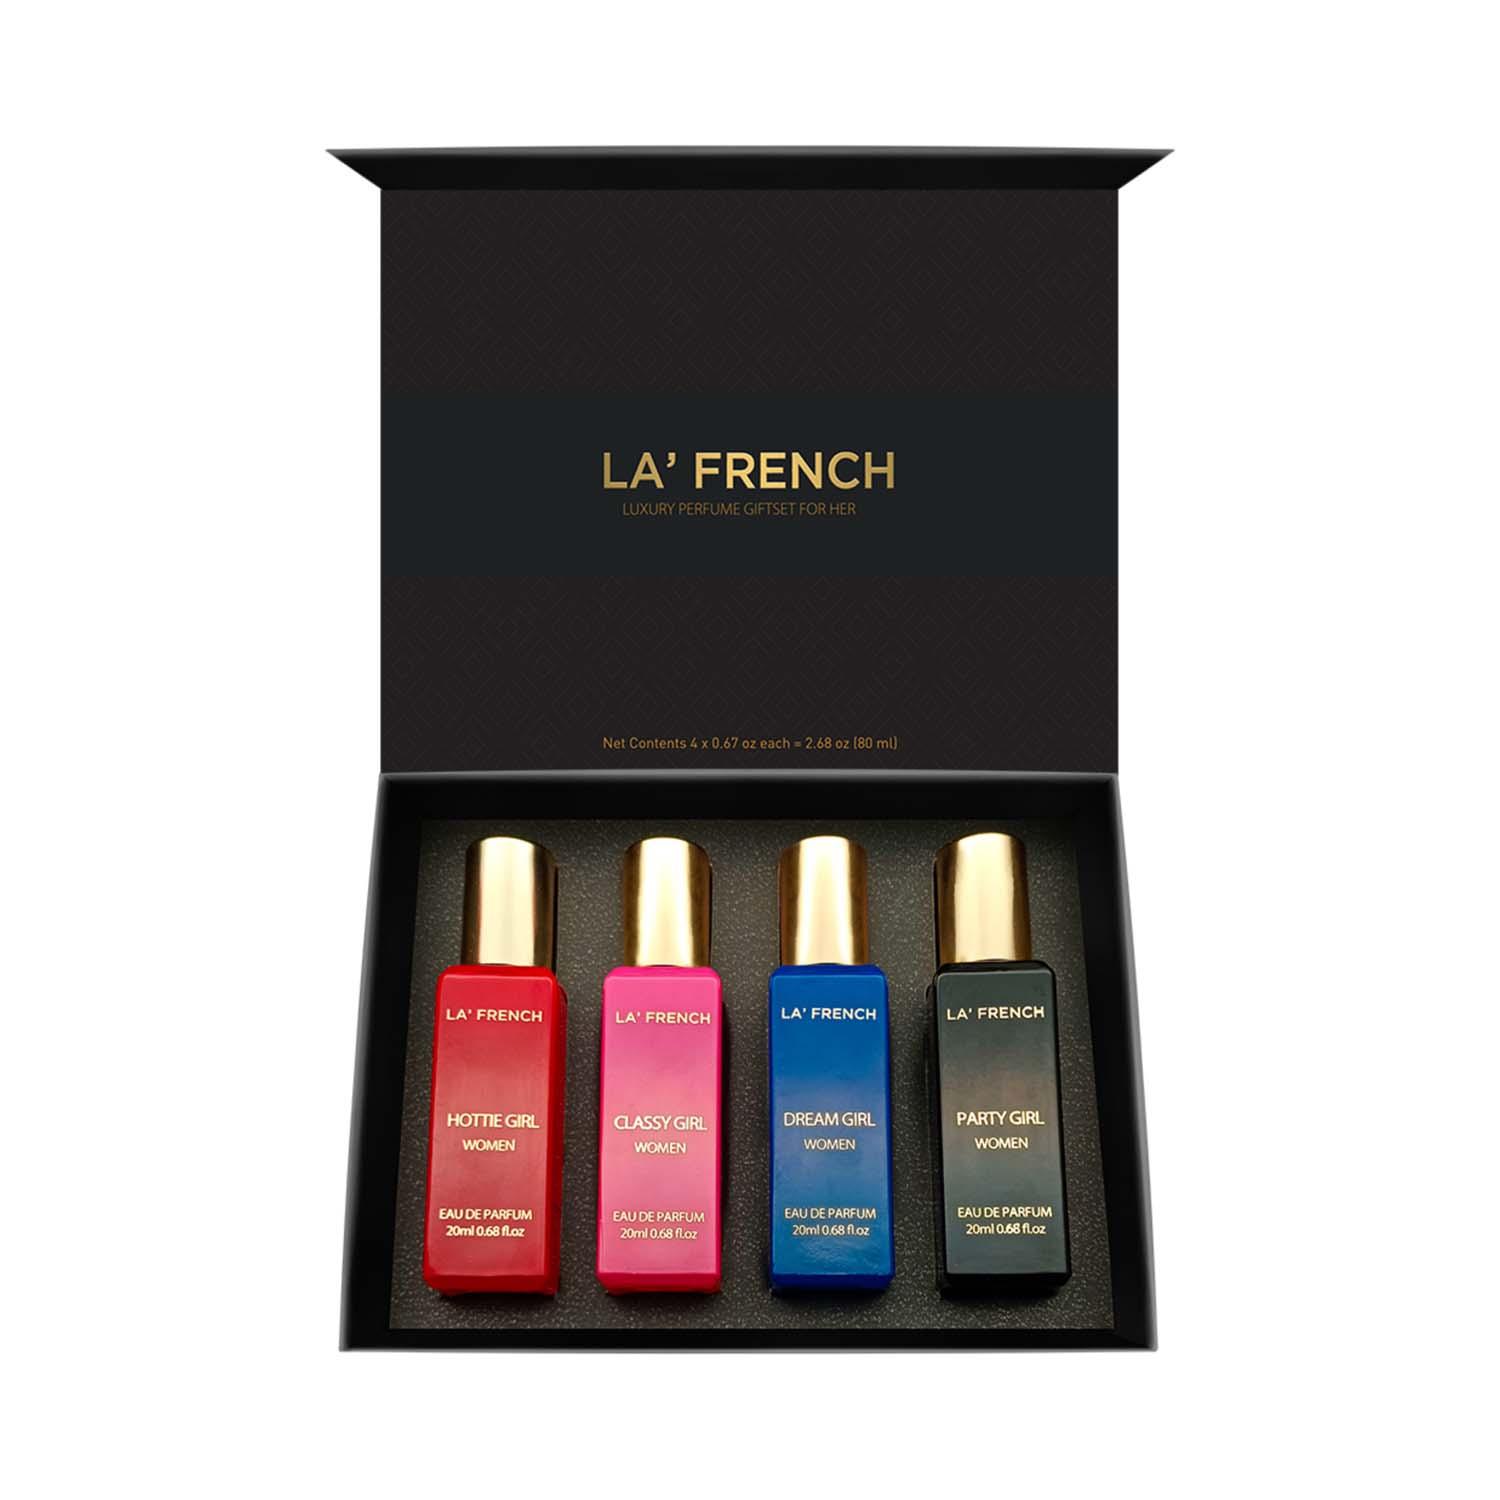 LA' French | LA' French Party Girl, Dream Girl, Hottie Girl, Classy Girl Luxury Perfume Gift Set For Her (4Pcs)